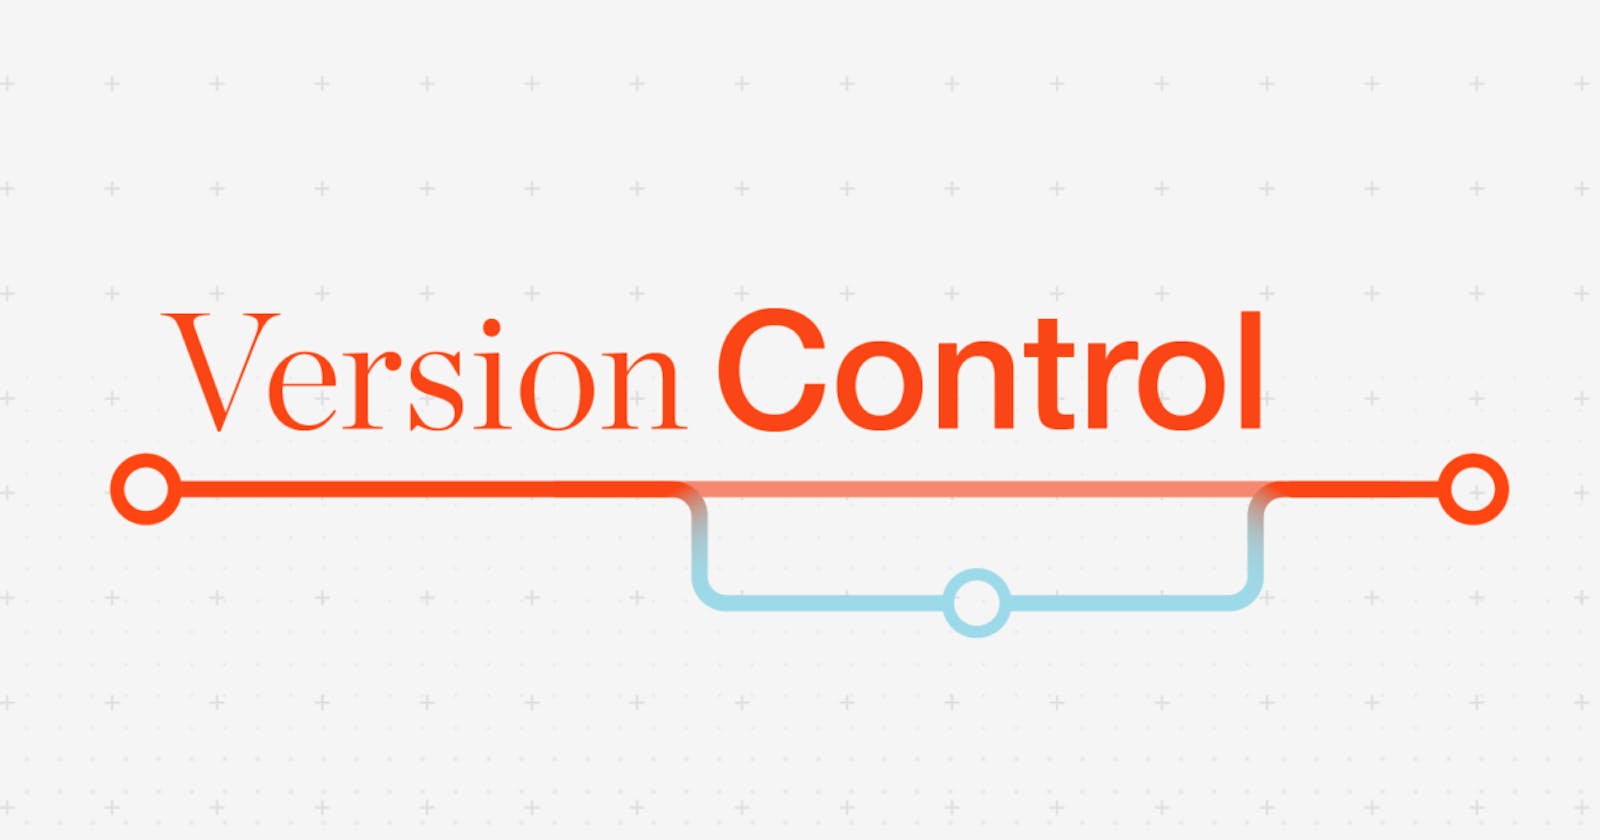 1. Version Control system